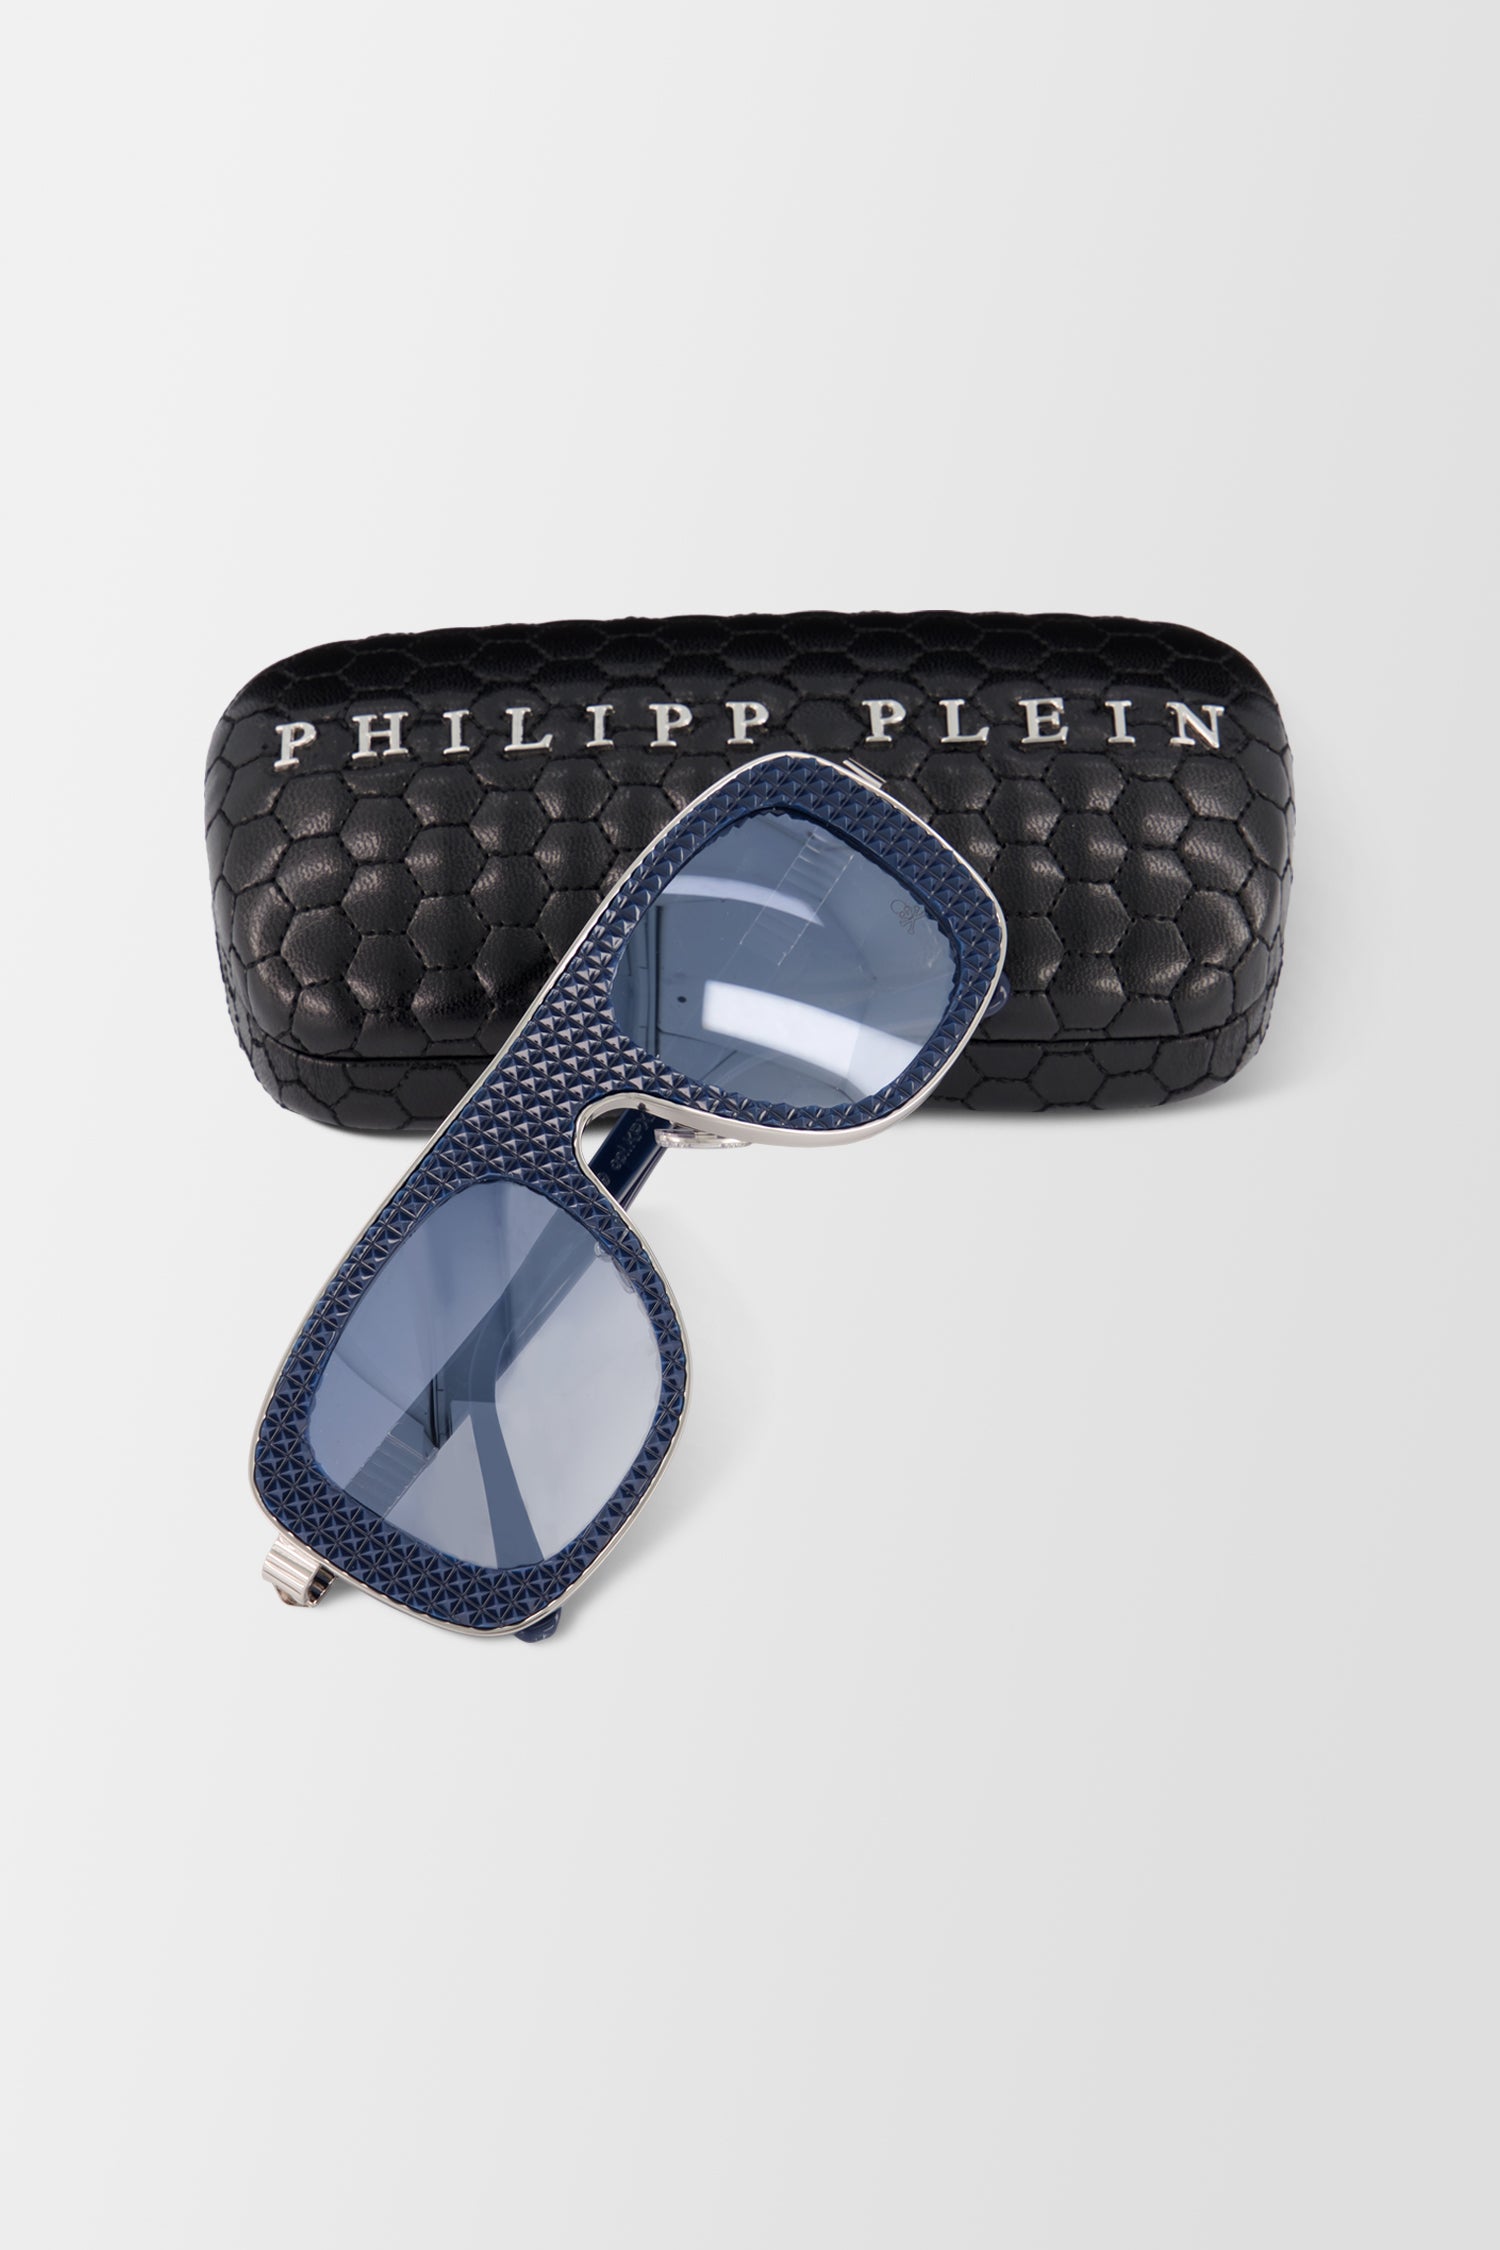 Philipp Plein Nickel Sunglasses